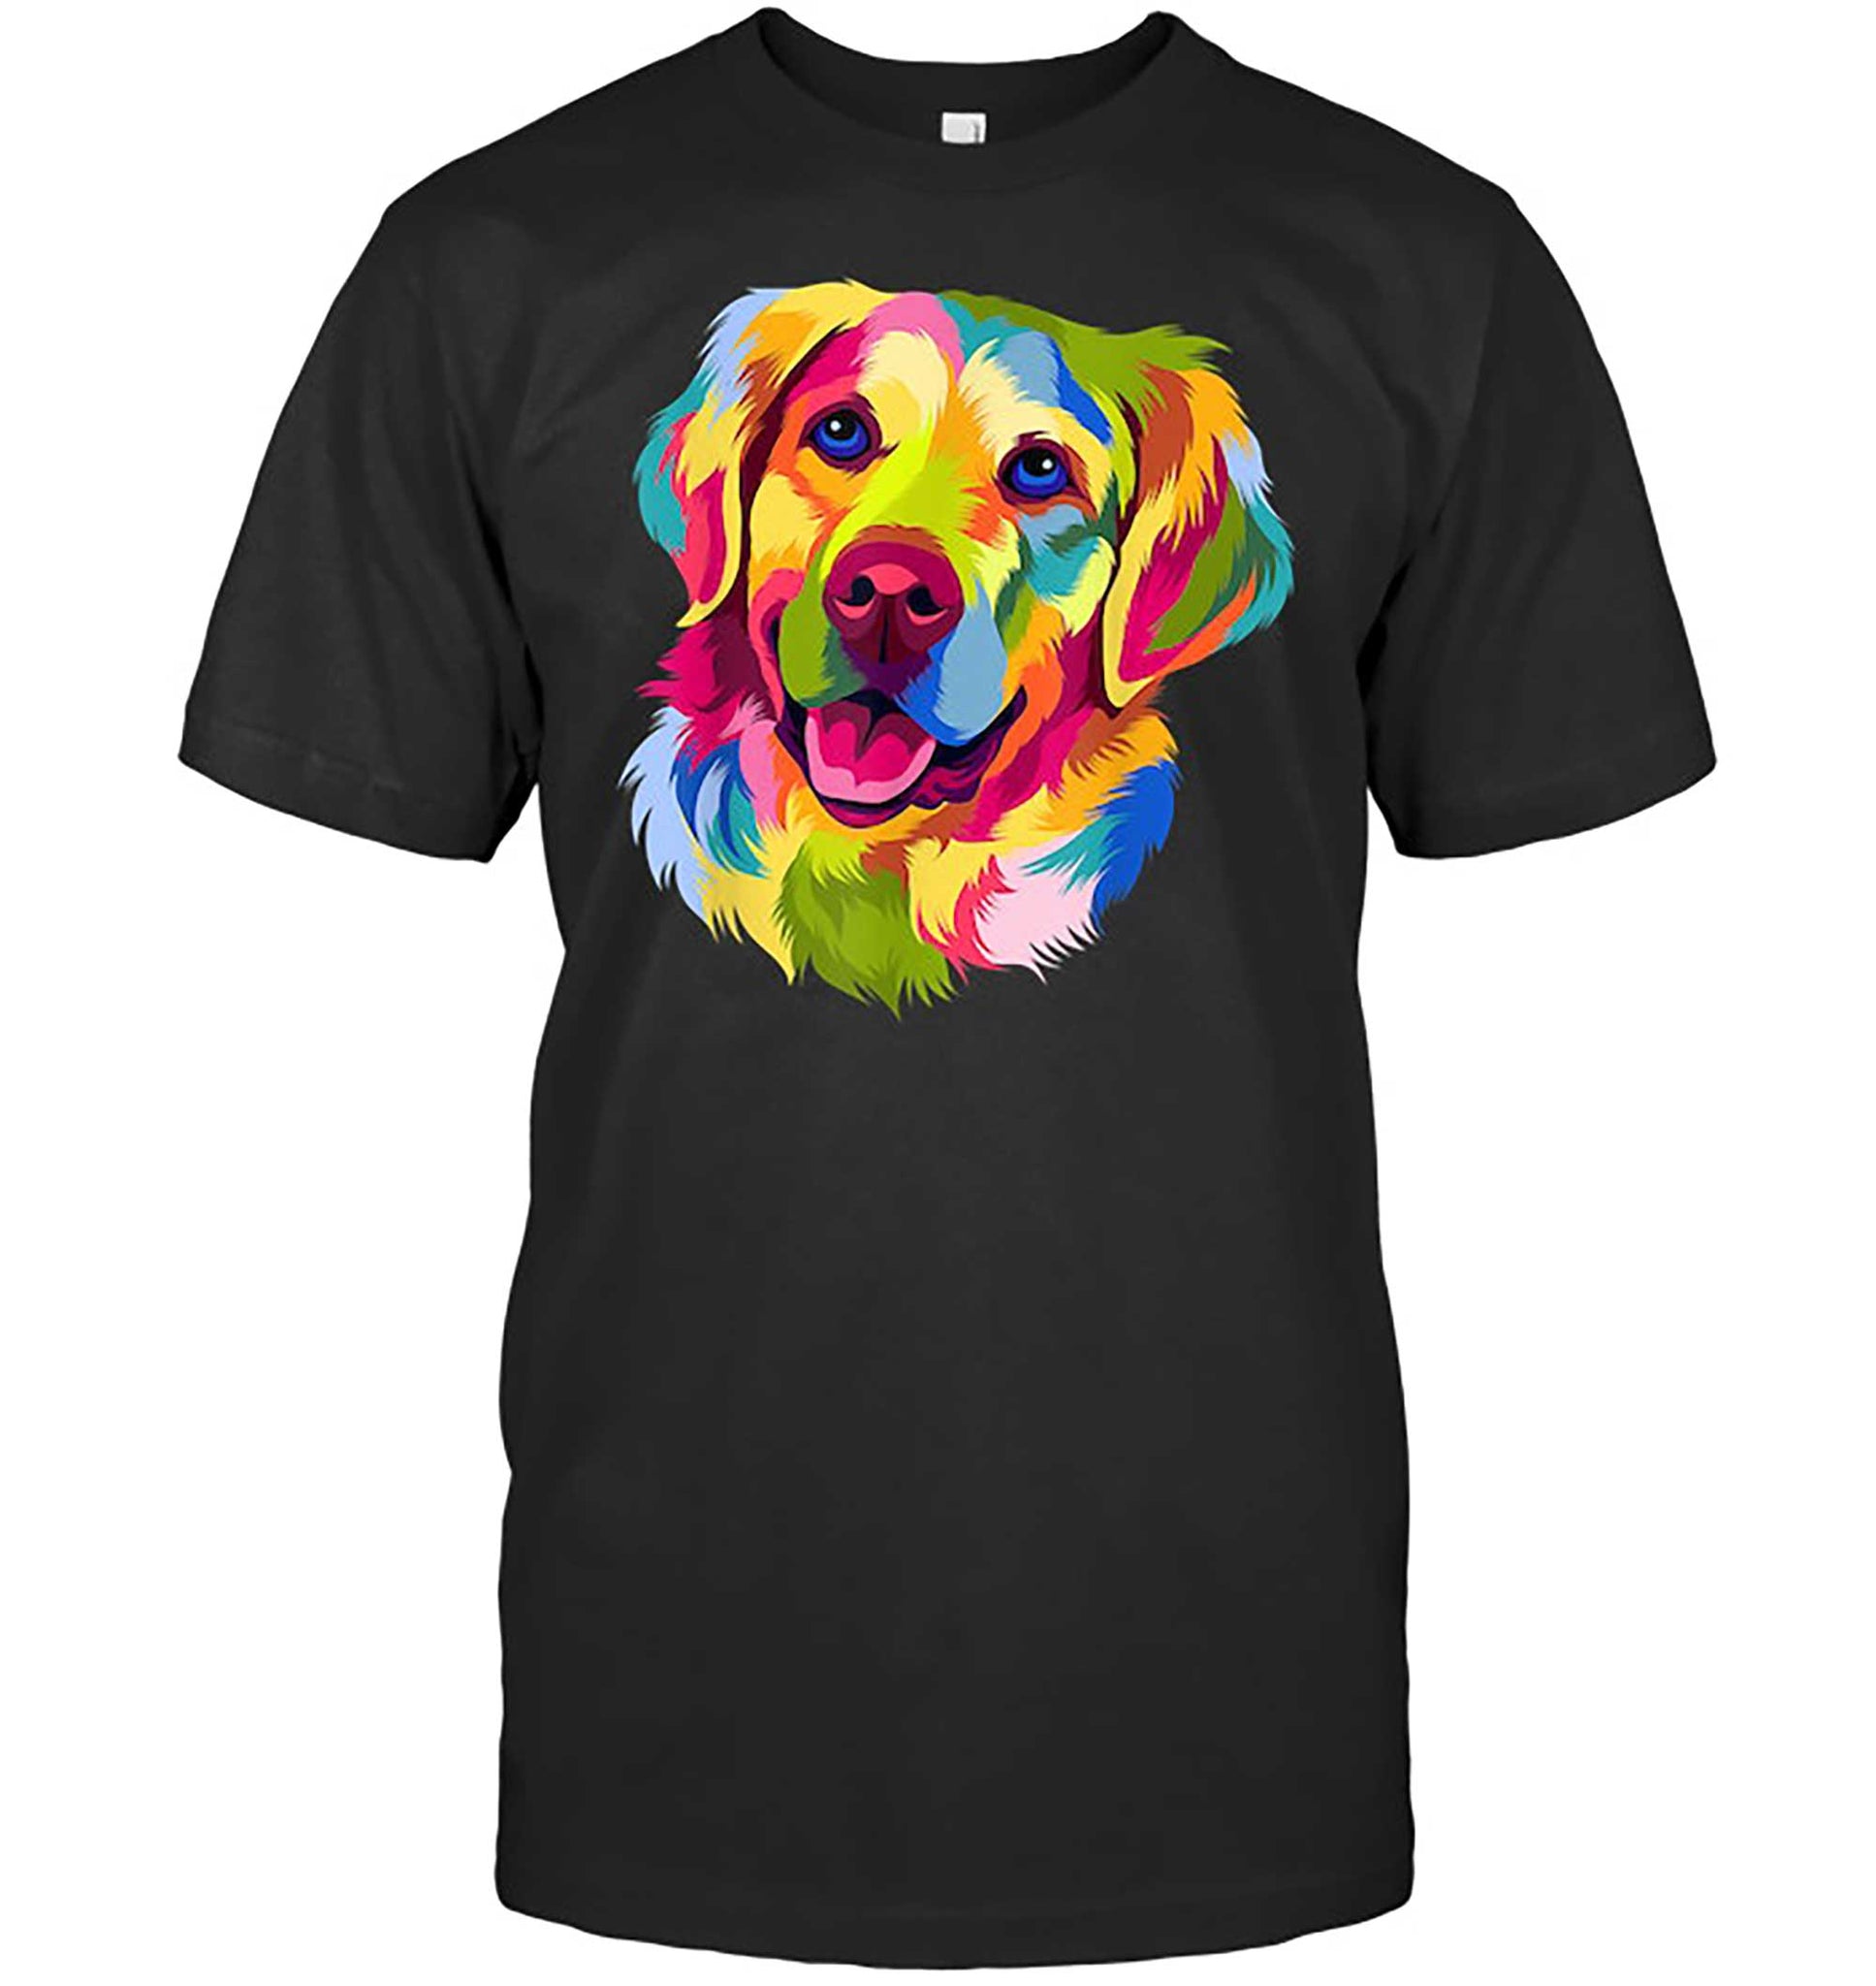 Skitongift-Art-Golden-Retriever-Dog-Golden-Pup-T-Shirt-Funny-Shirts-Hoodie-Sweater-Short-Sleeve-Casual-Shirt